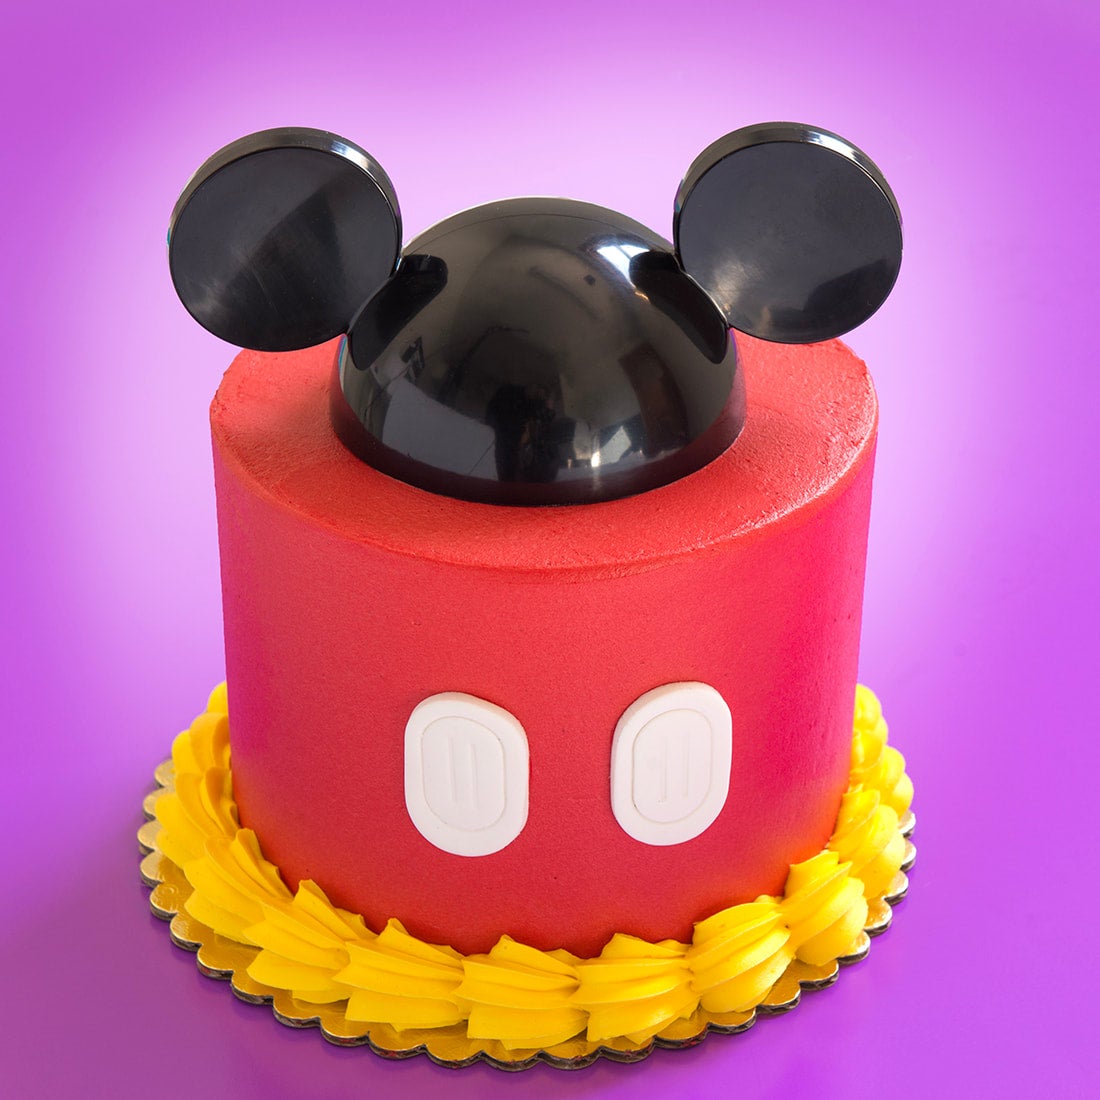 Mickey Mouse Cake | Cartoon Fondant theme Cake - Levanilla ::